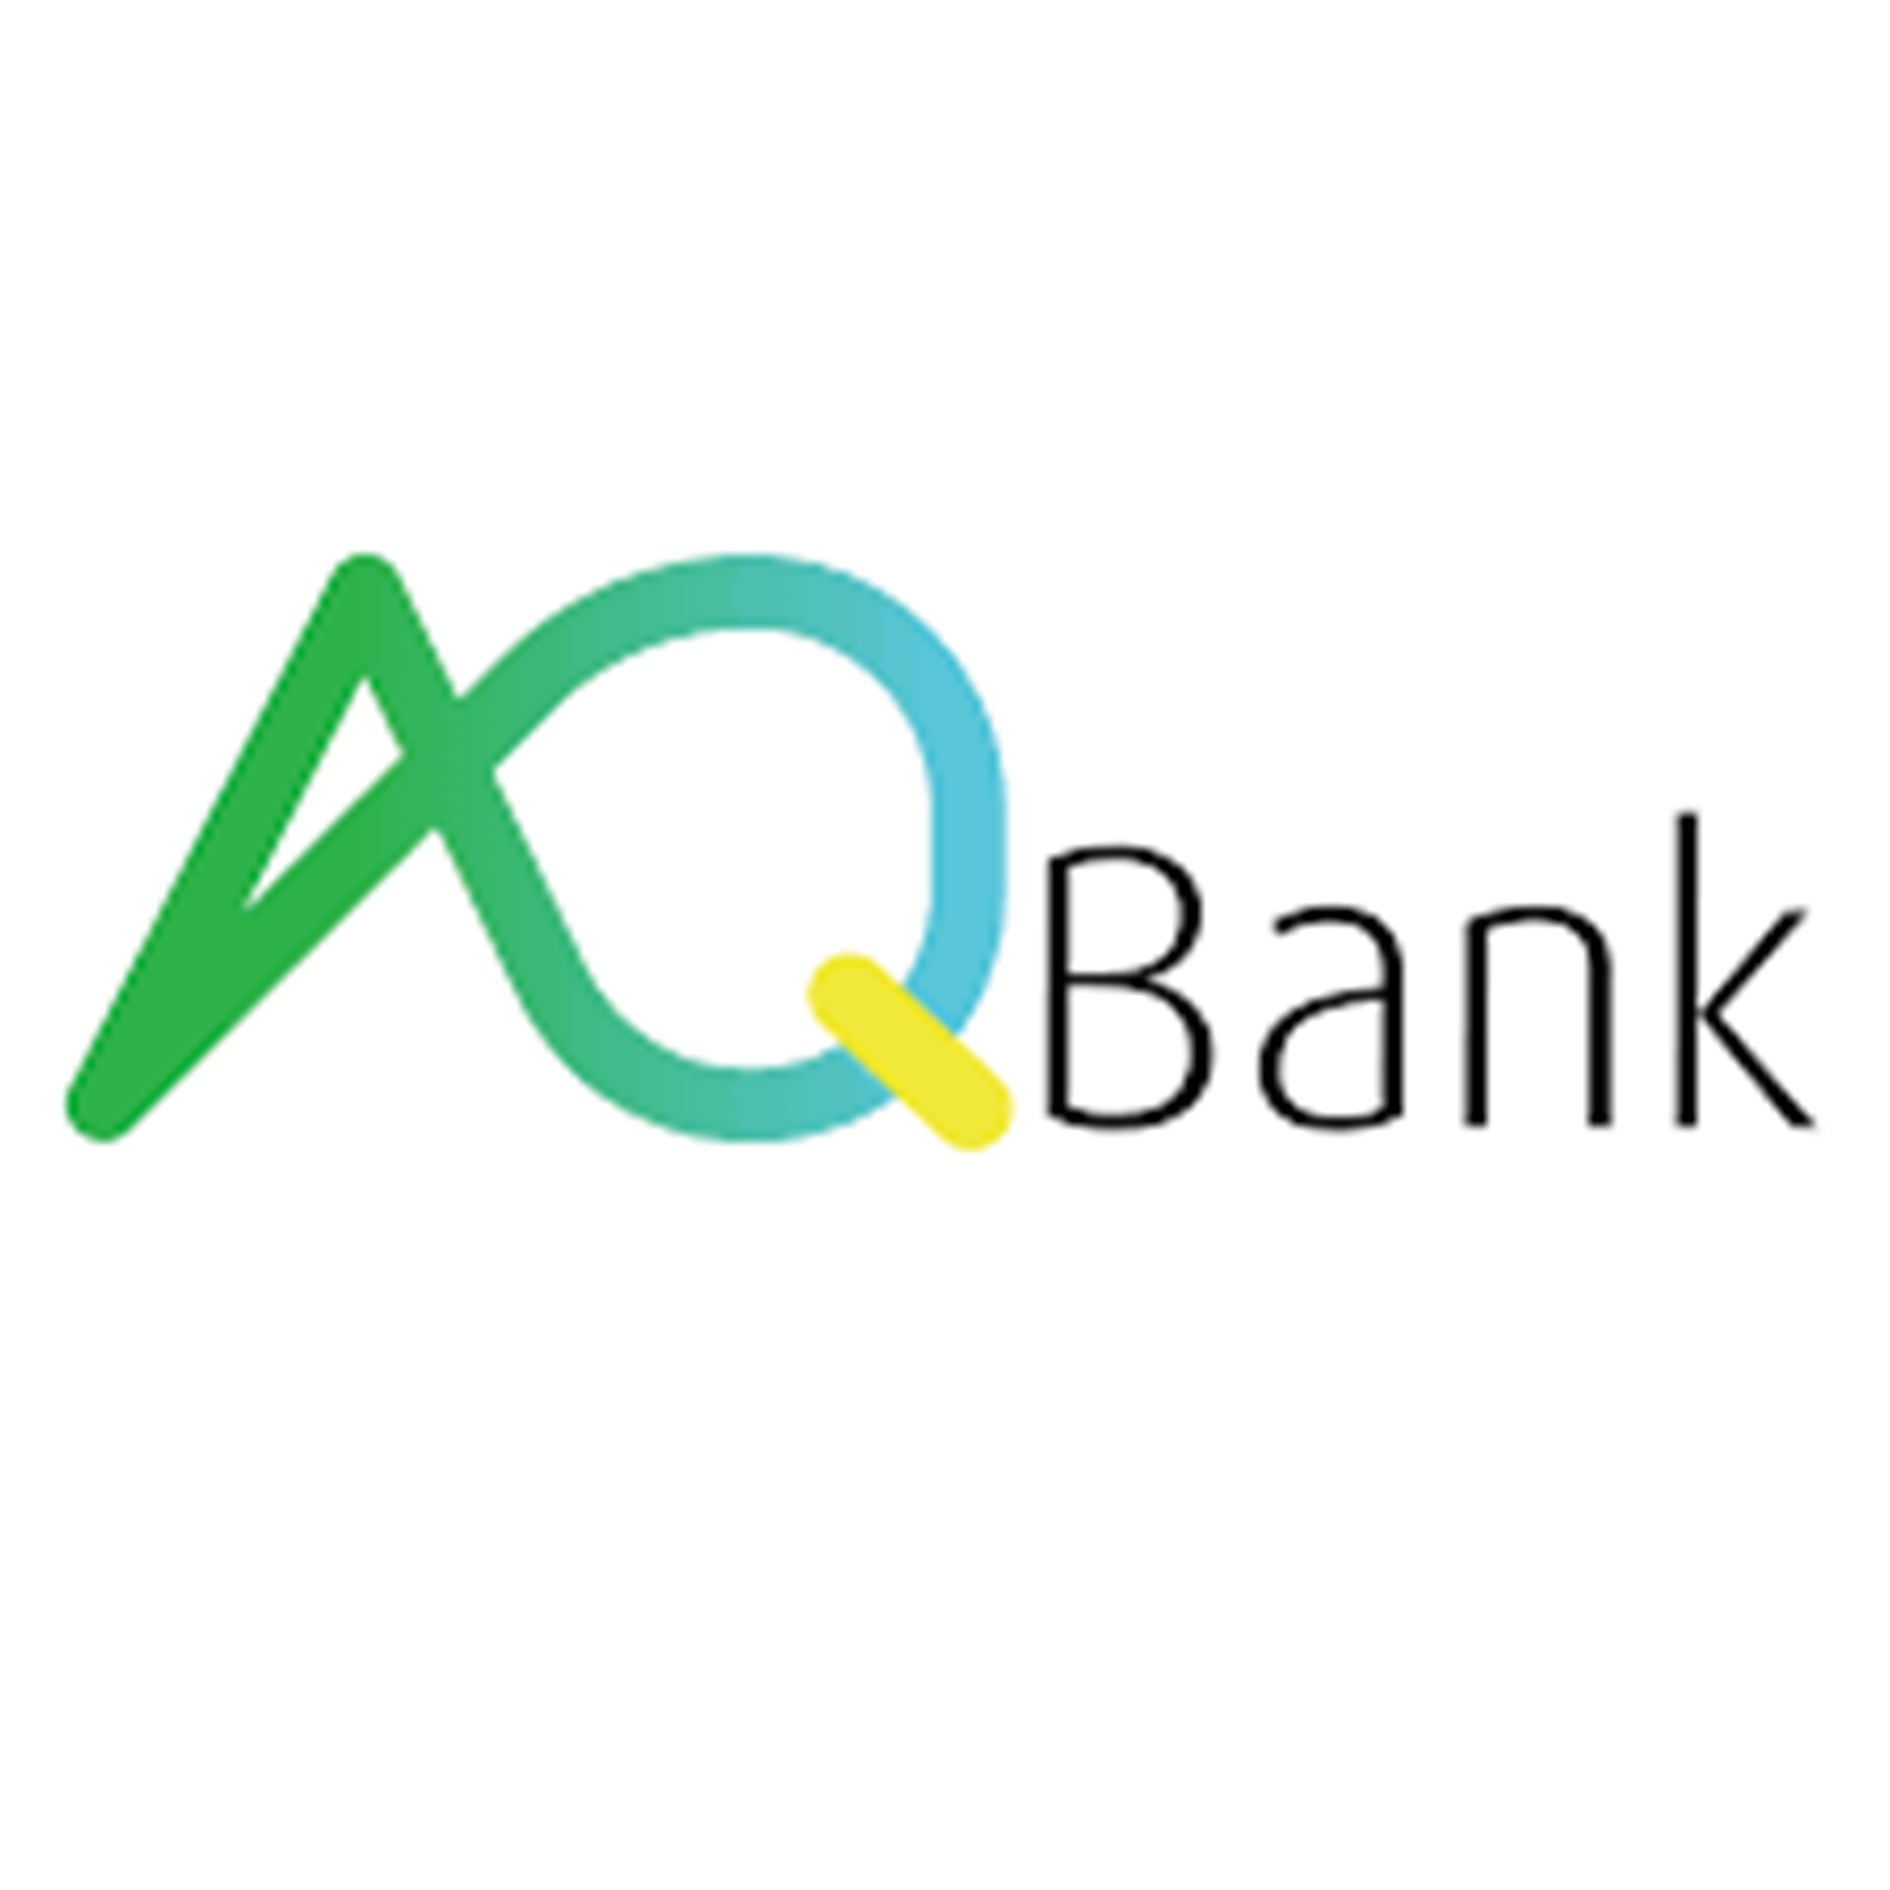 AQ Bank